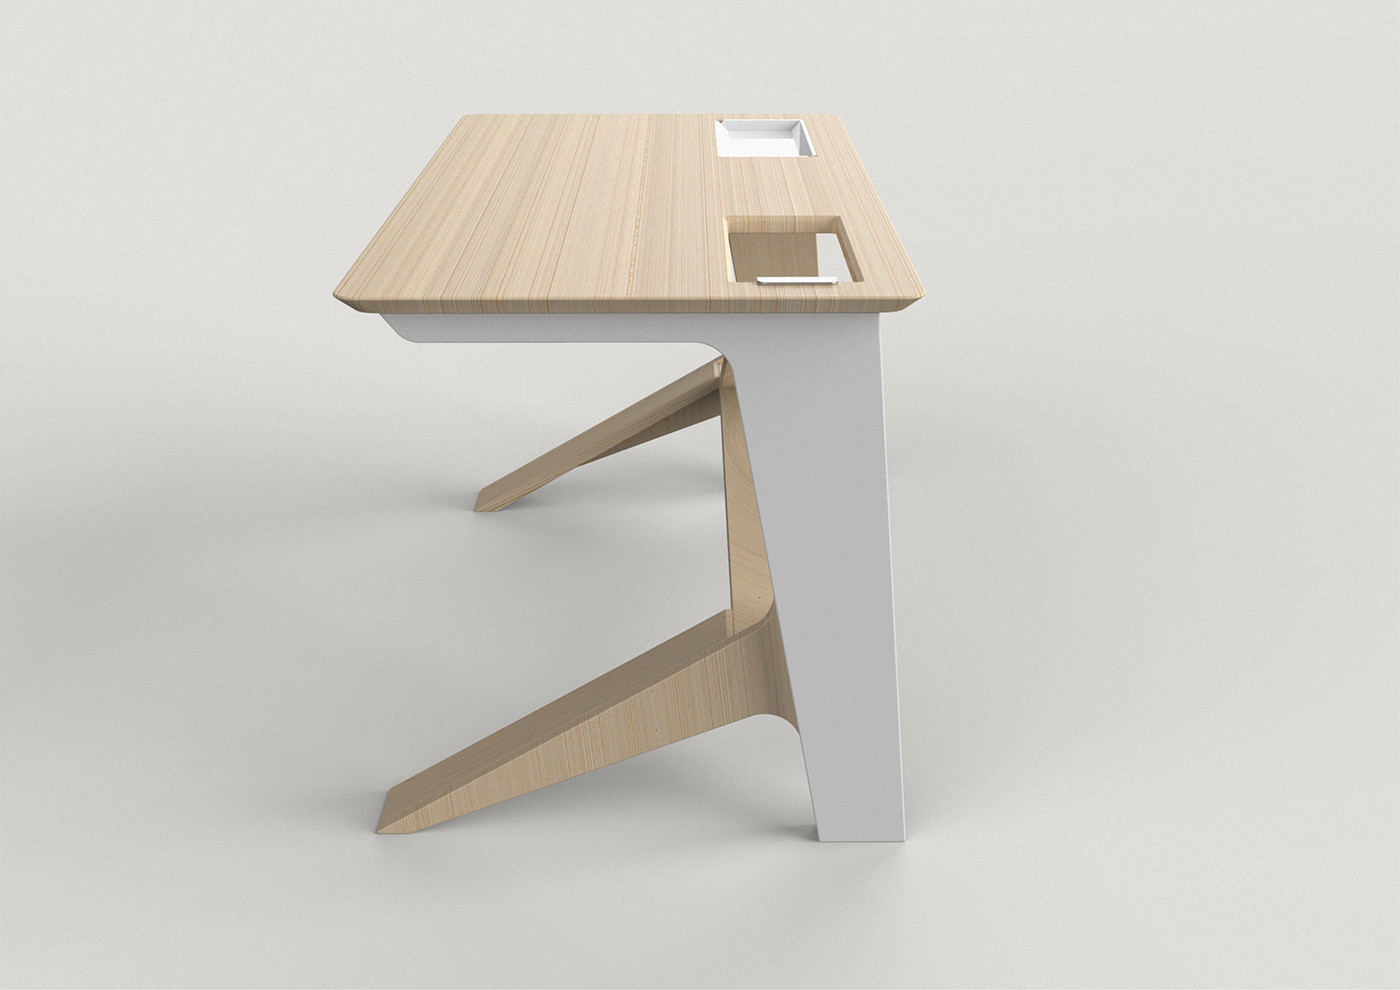 Cat desk furniture Pet industrial design  table cnc wood product design  giddy